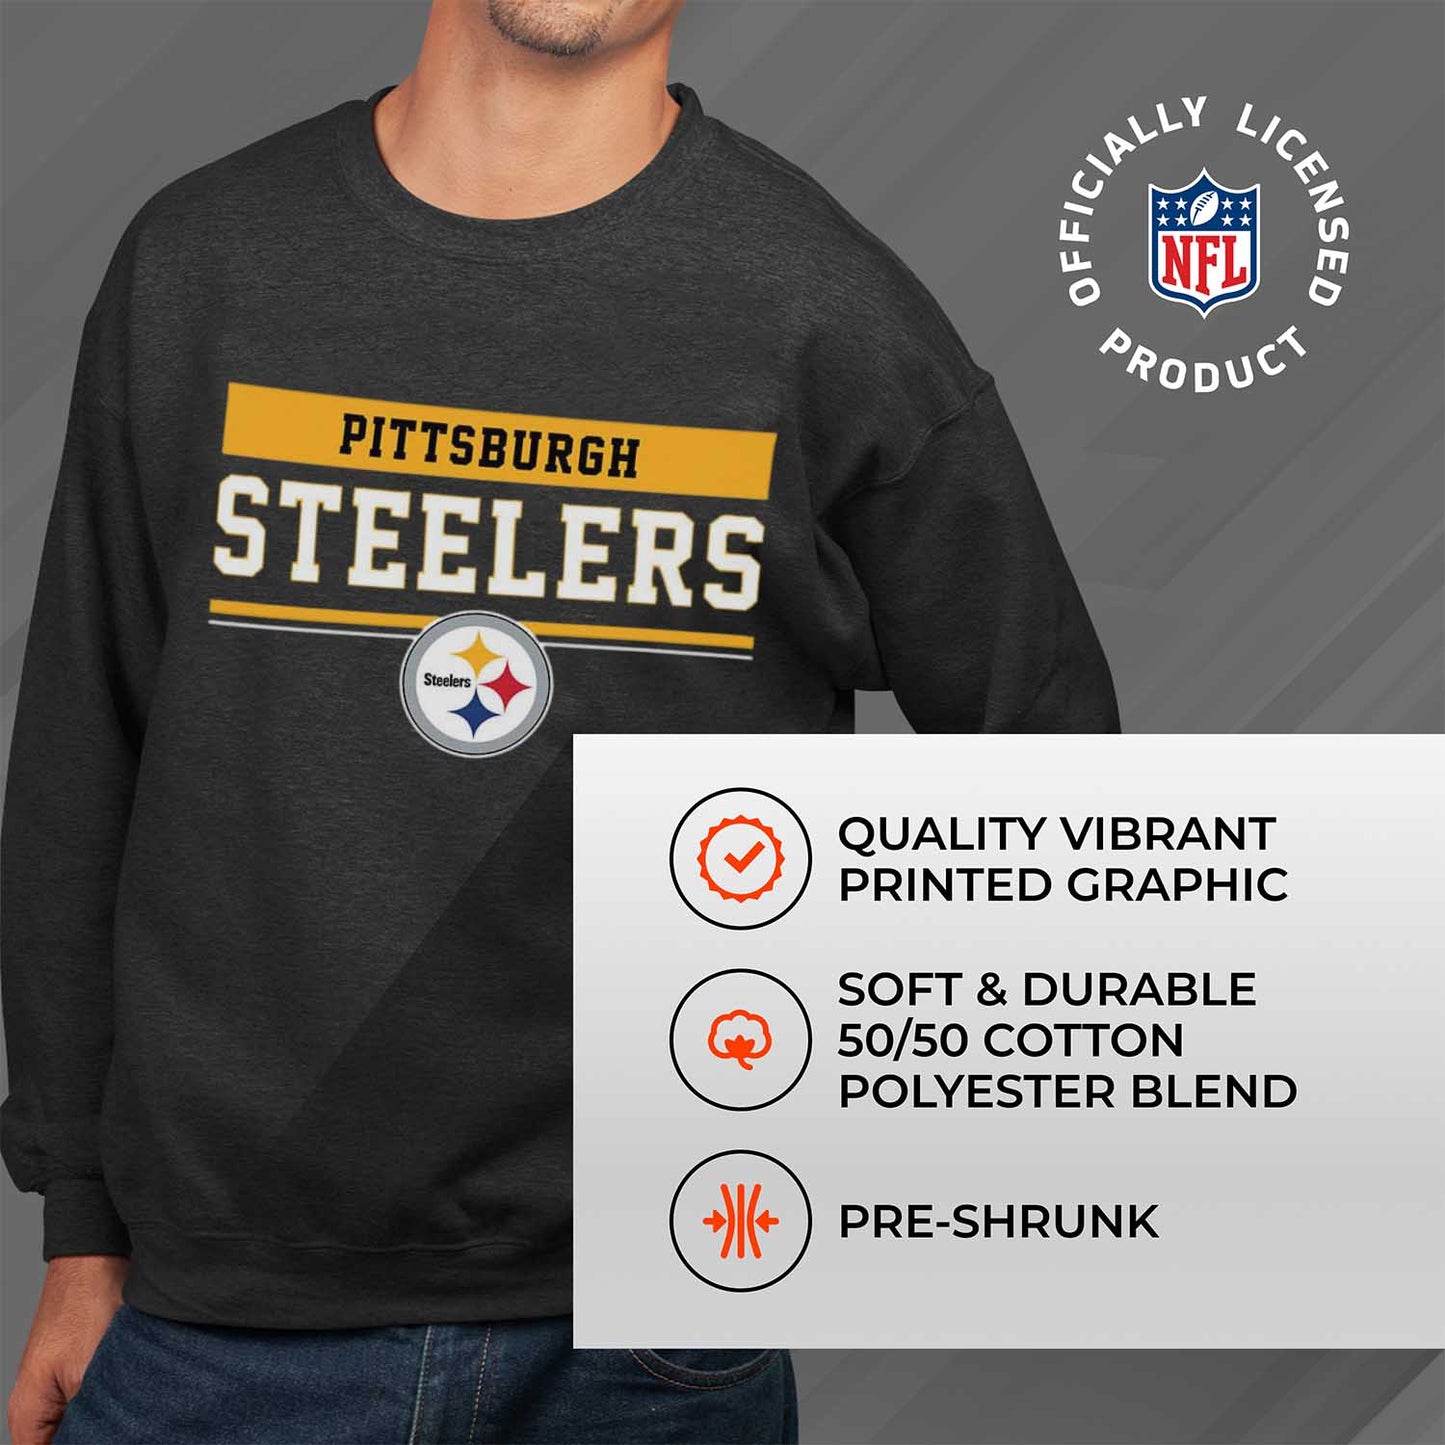 Pittsburgh Steelers NFL Adult Long Sleeve Team Block Charcoal Crewneck Sweatshirt - Charcoal